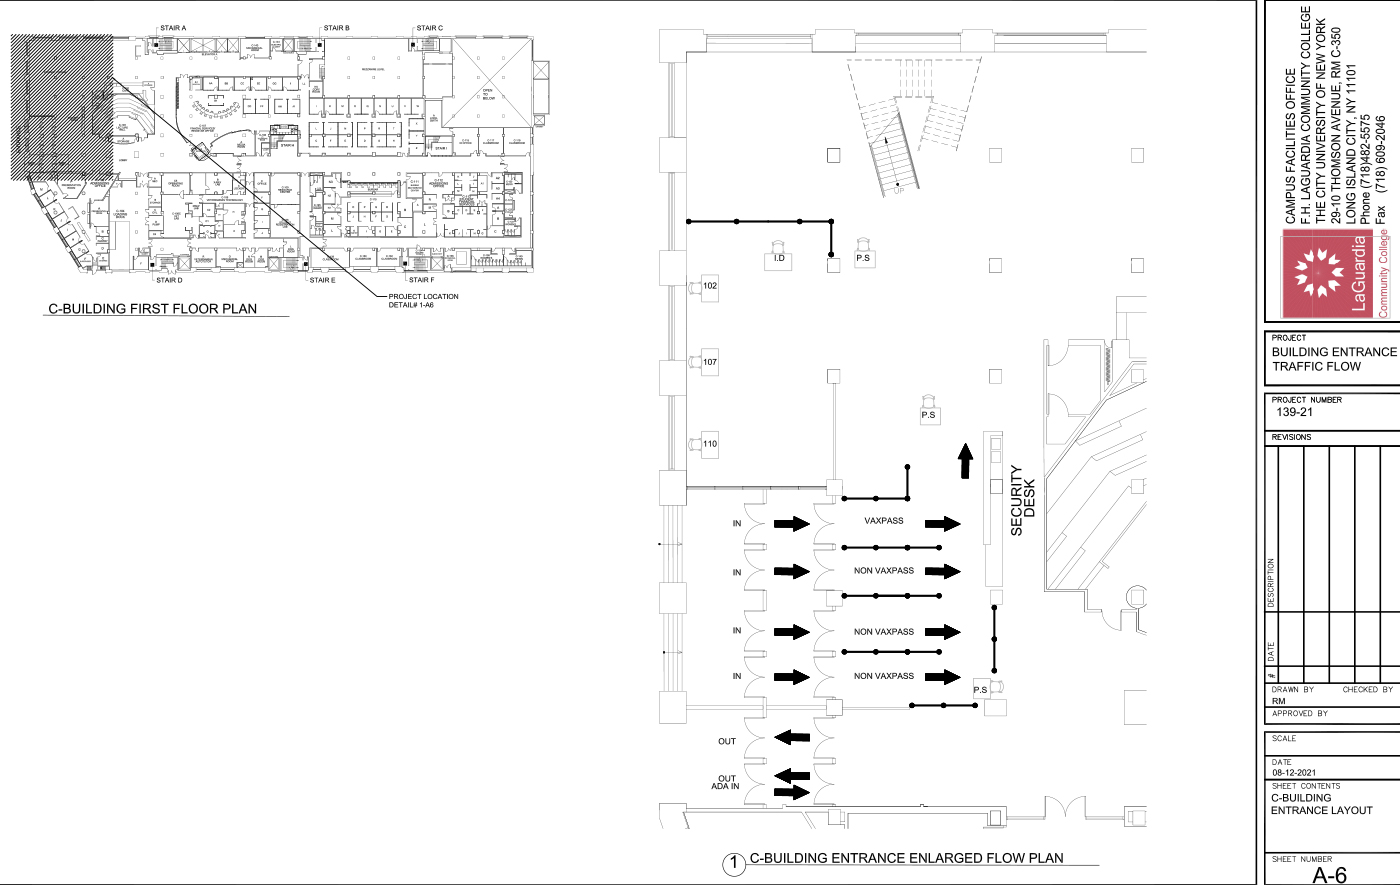 LaGuardia's campus facilities E-building  5th floor_ office suite layout